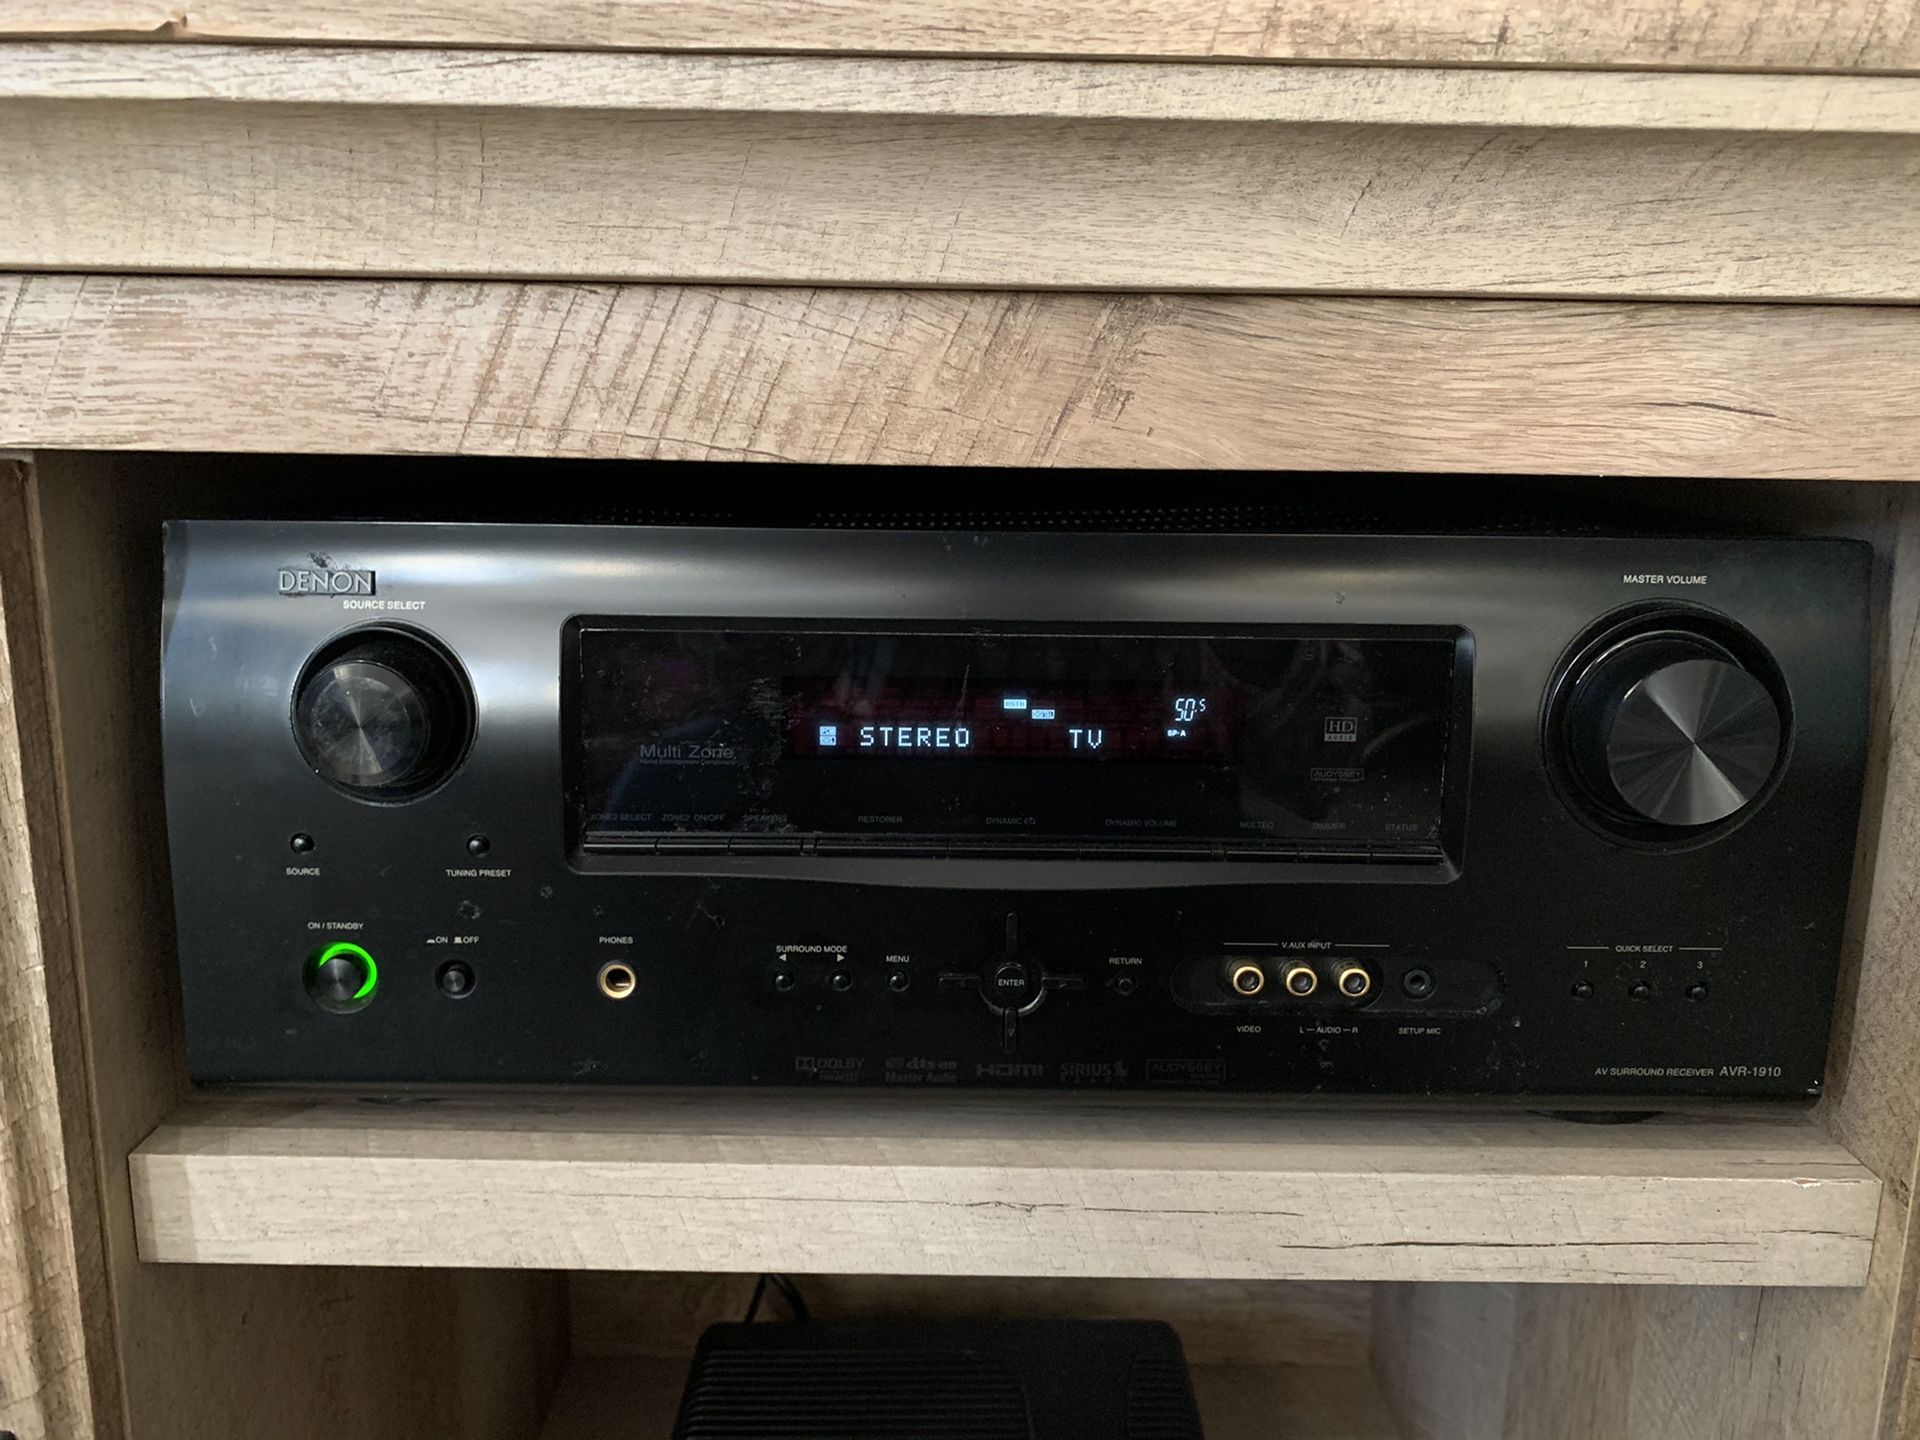 Denon stereo surround sound receiver